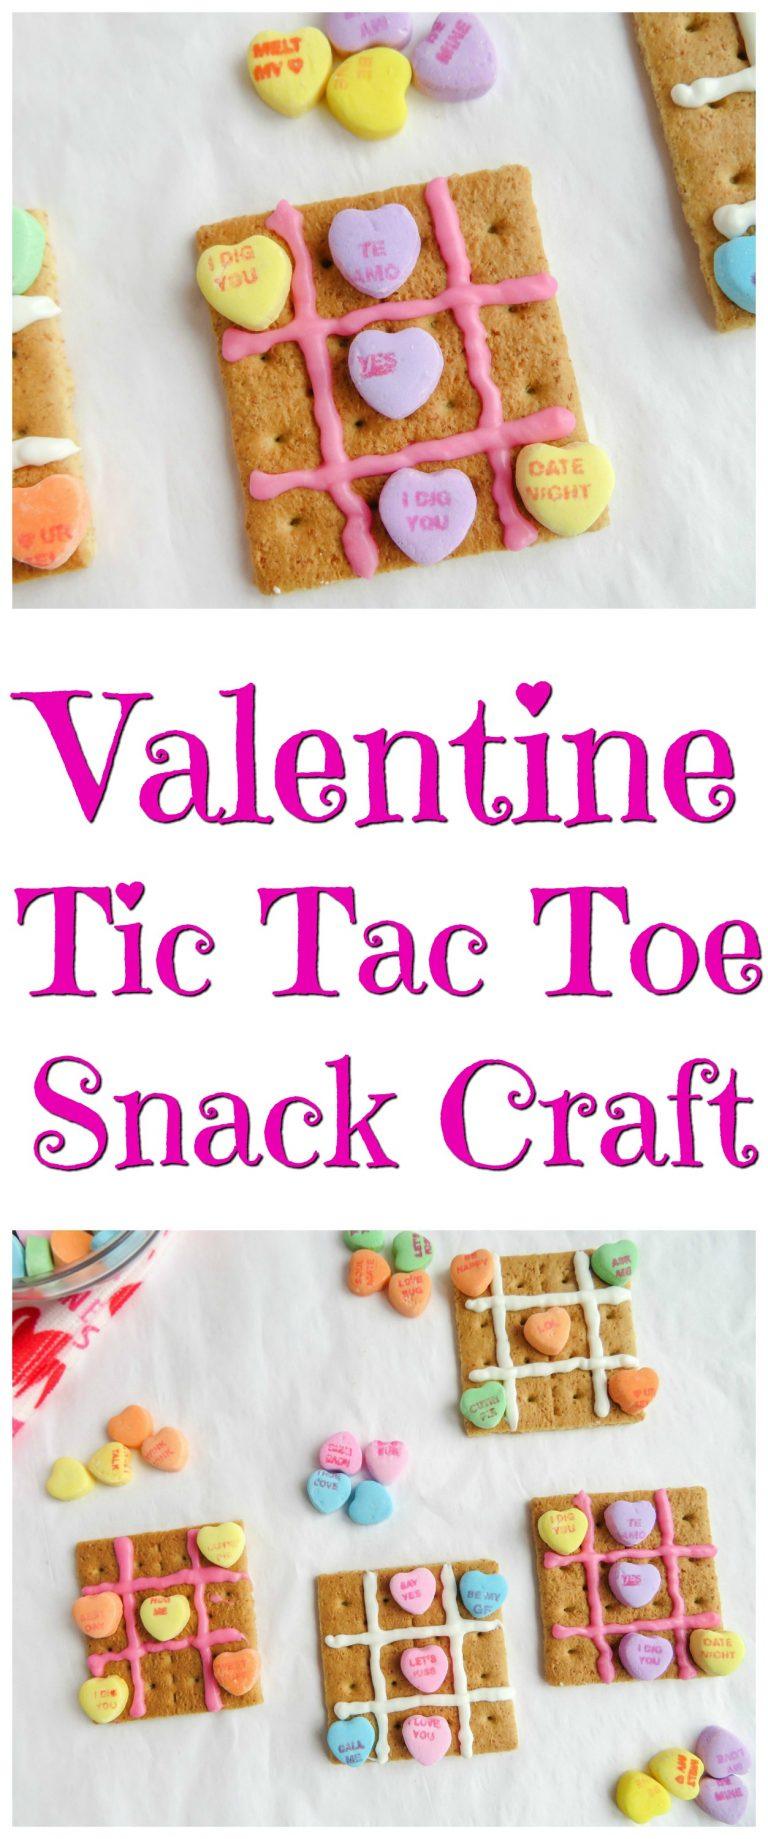 Valentine Tic Tac Toe Snack Craft